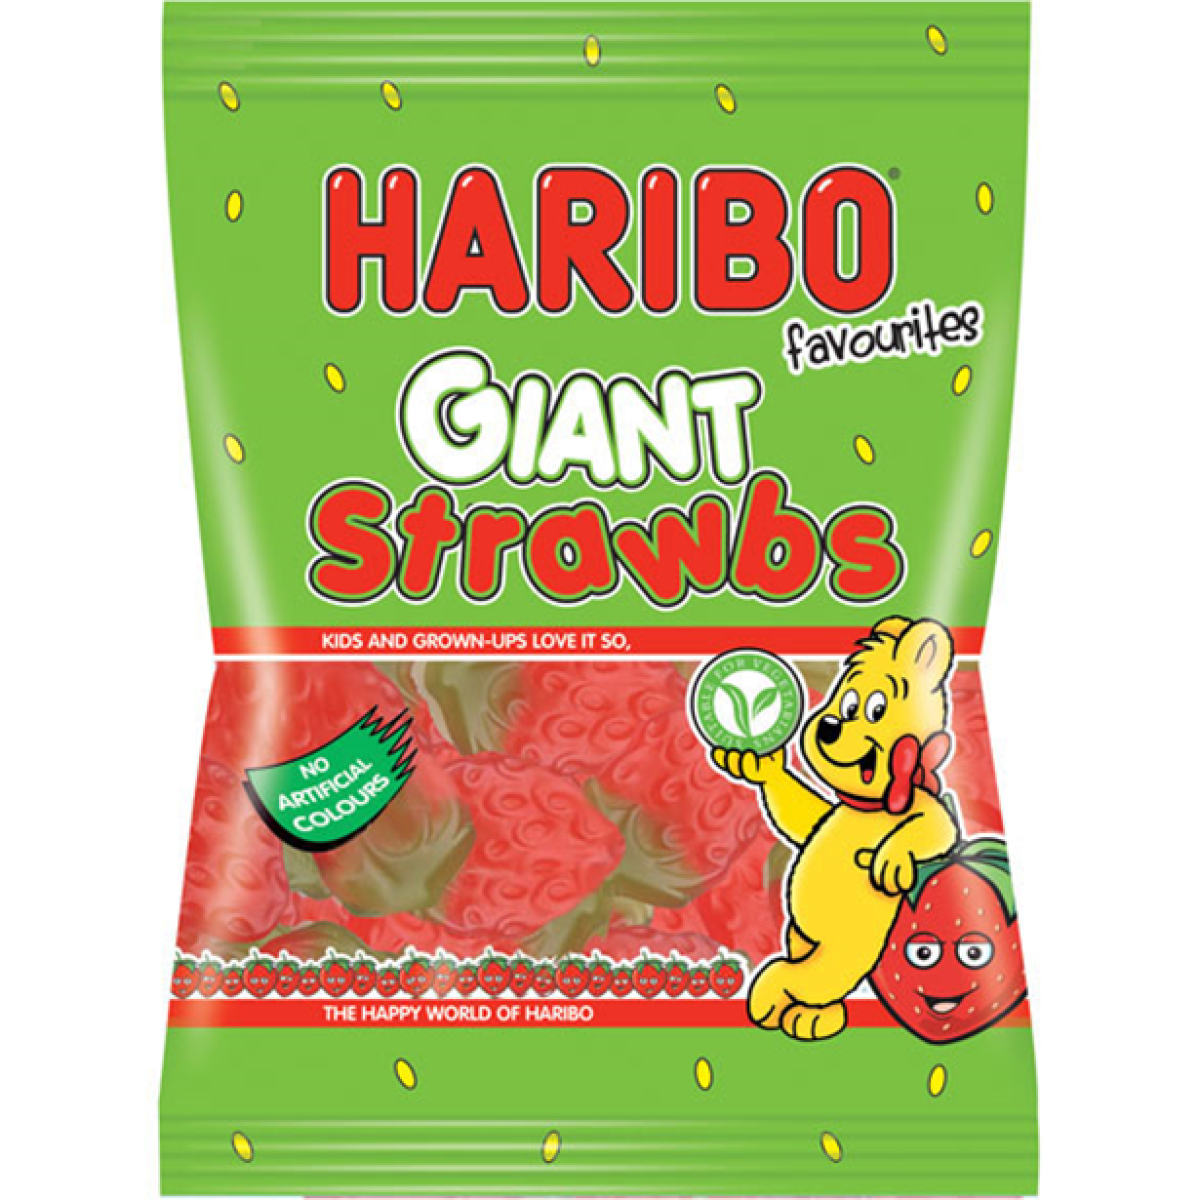 Haribo Giant Strawbs 60g